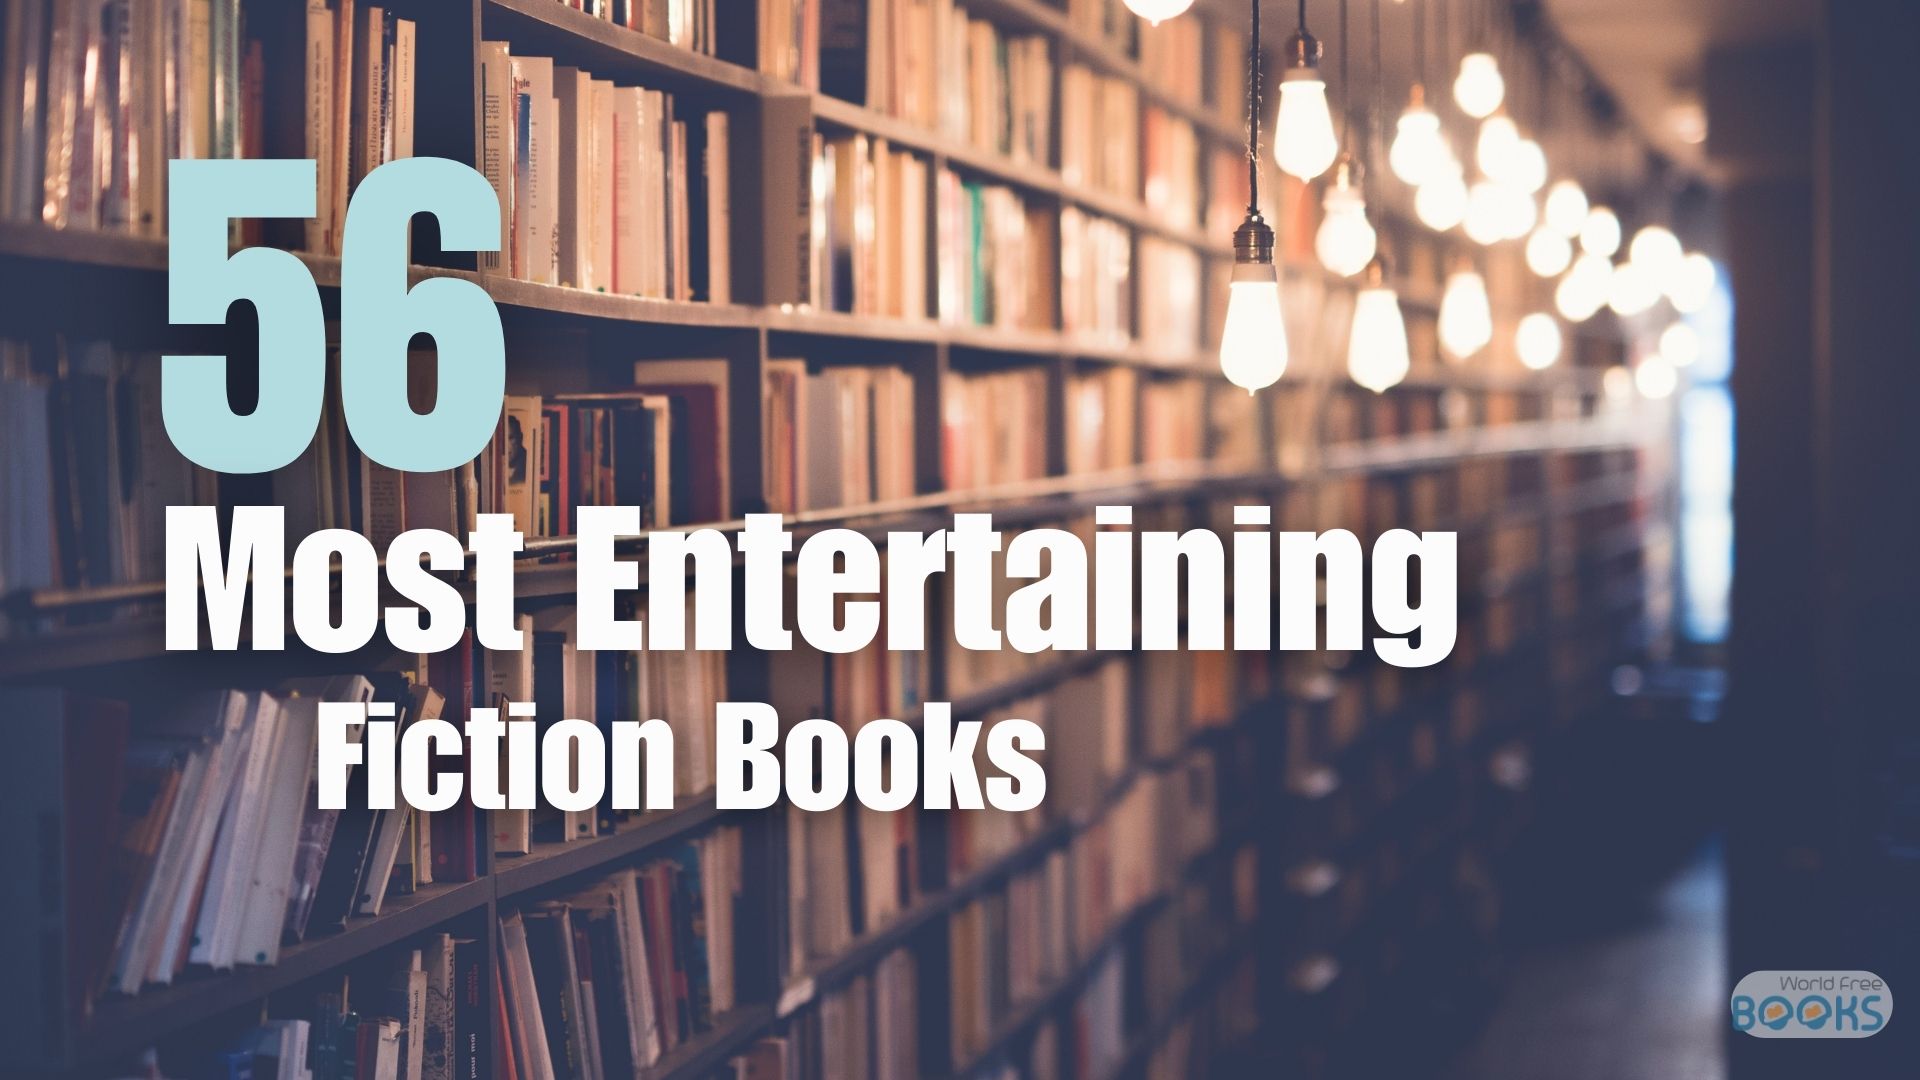 56 Most Entertaining Fiction Books